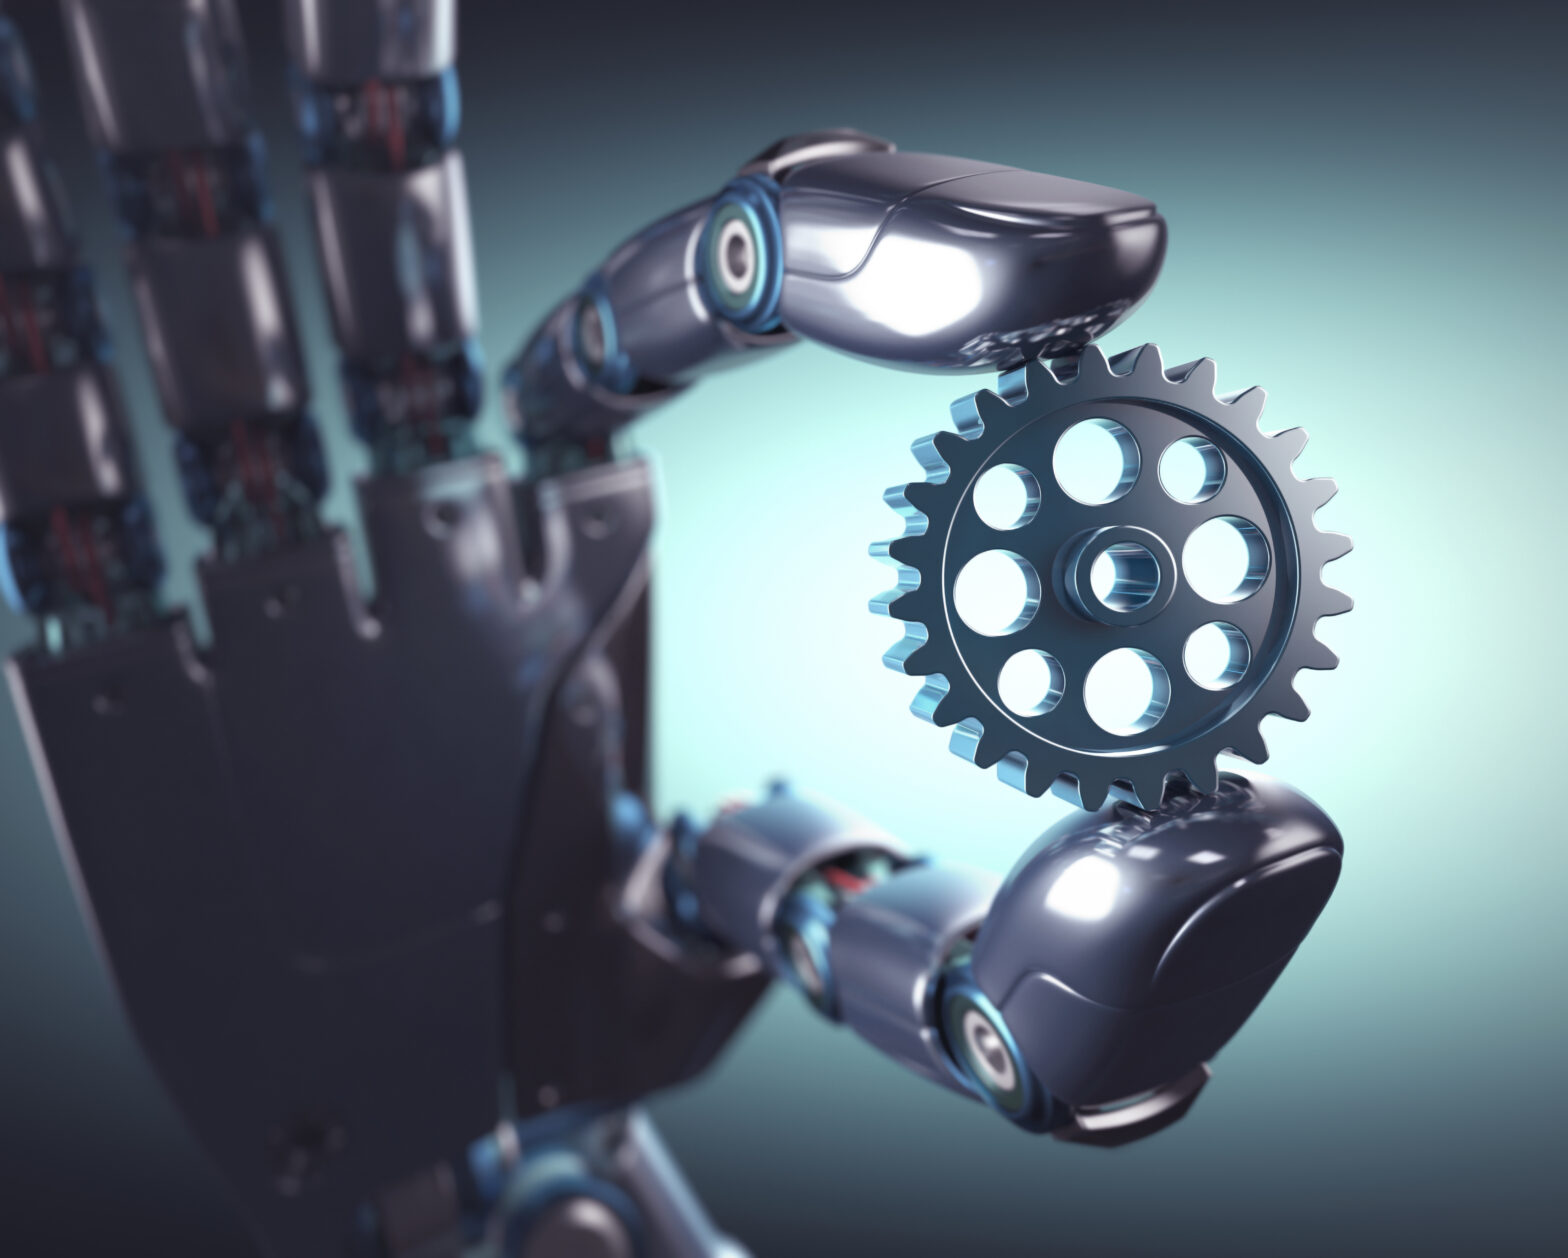 Advanced digital manufacturing improving robotic dexterity